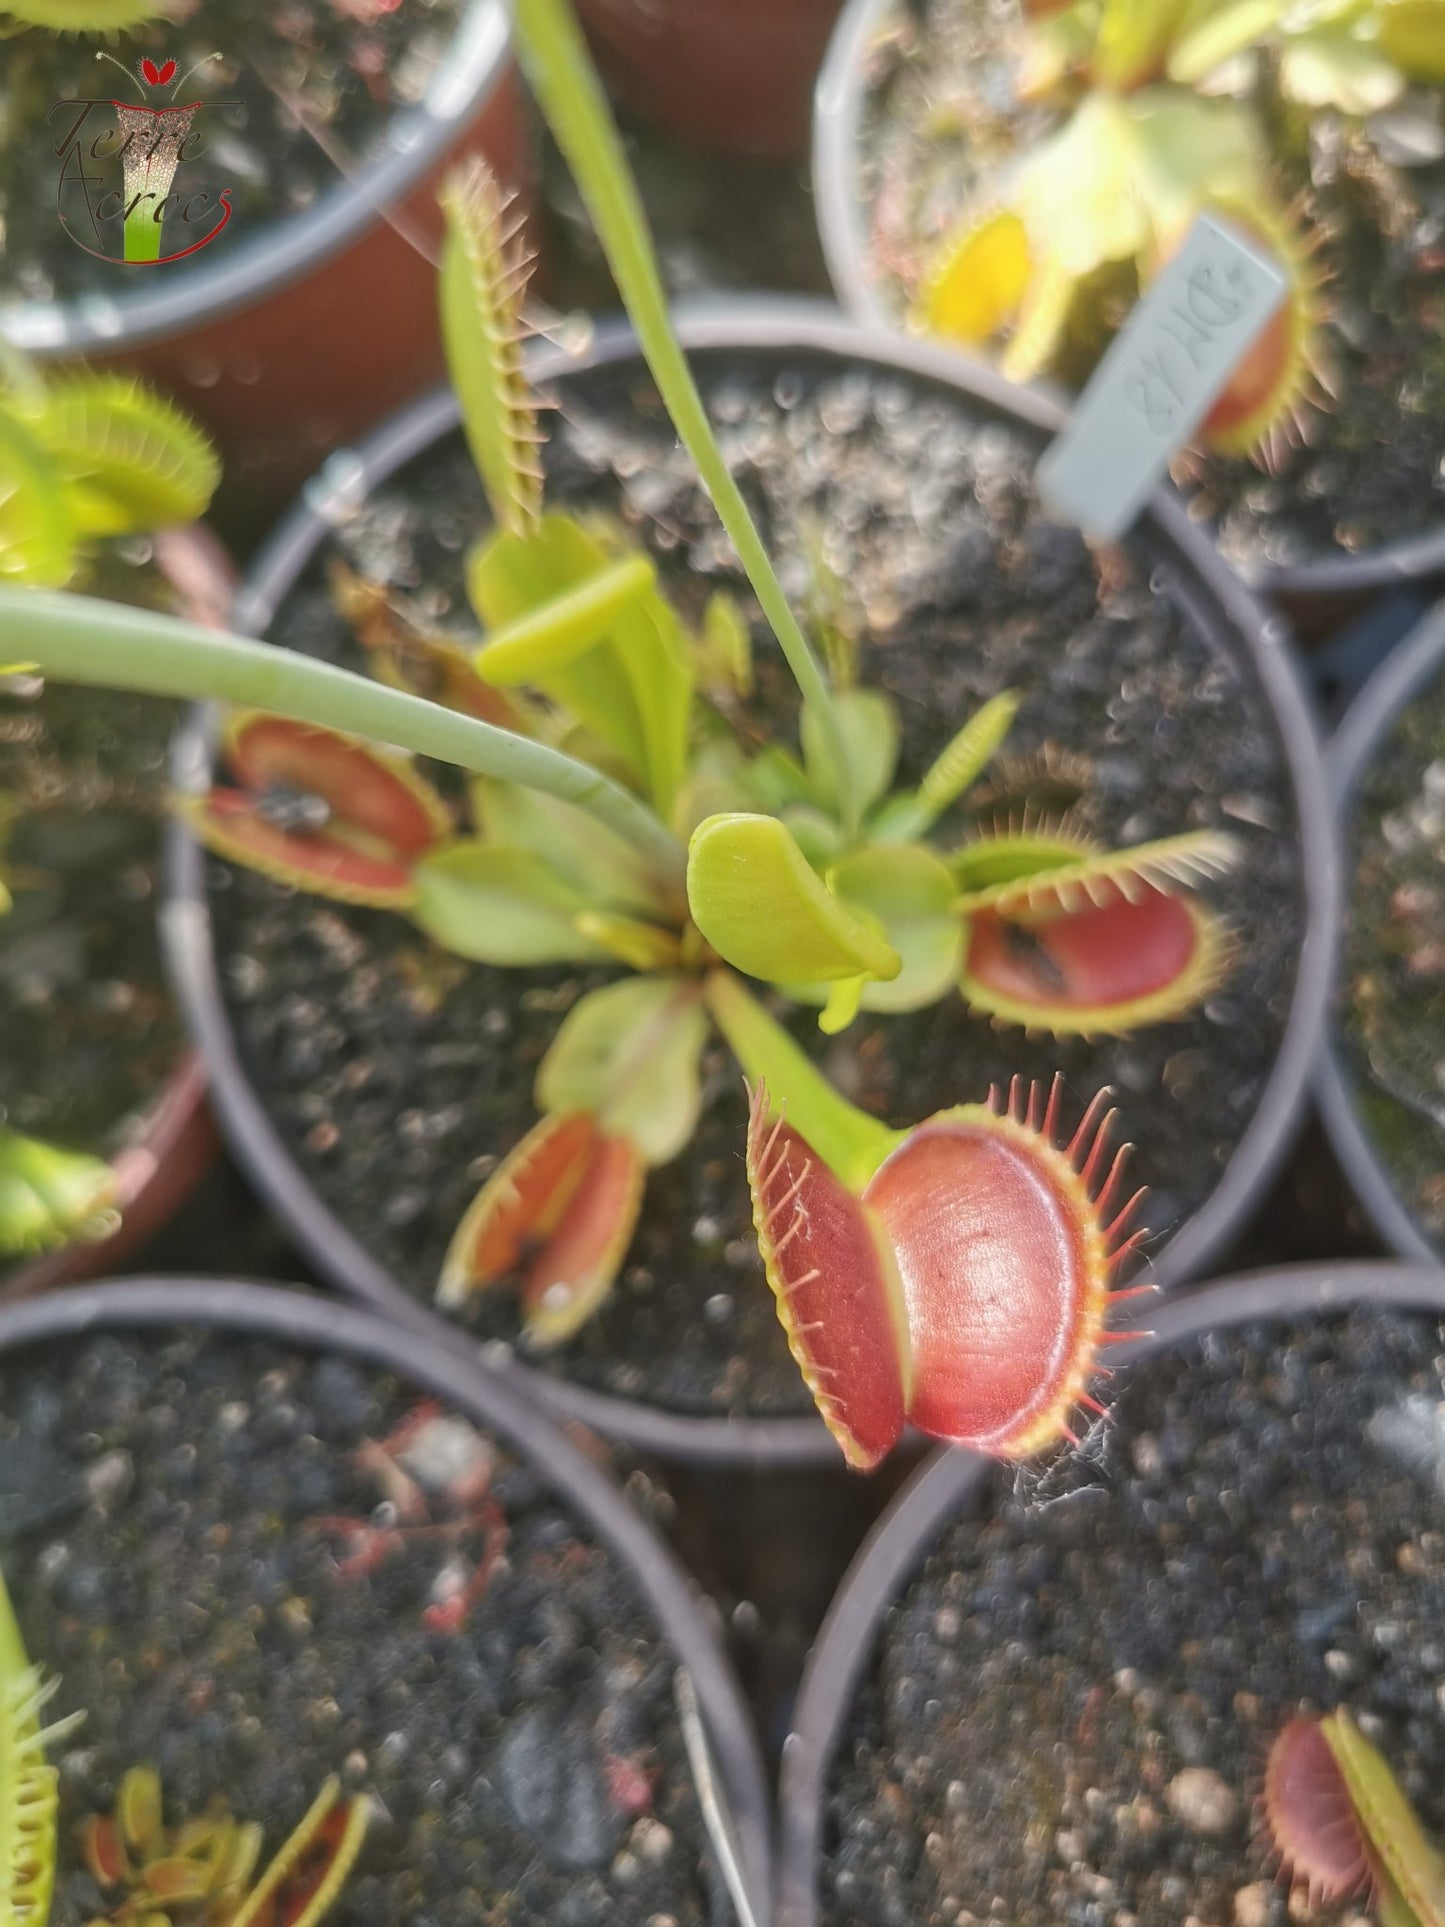 DM18 Dionaea muscipula -- "Giant Peach"